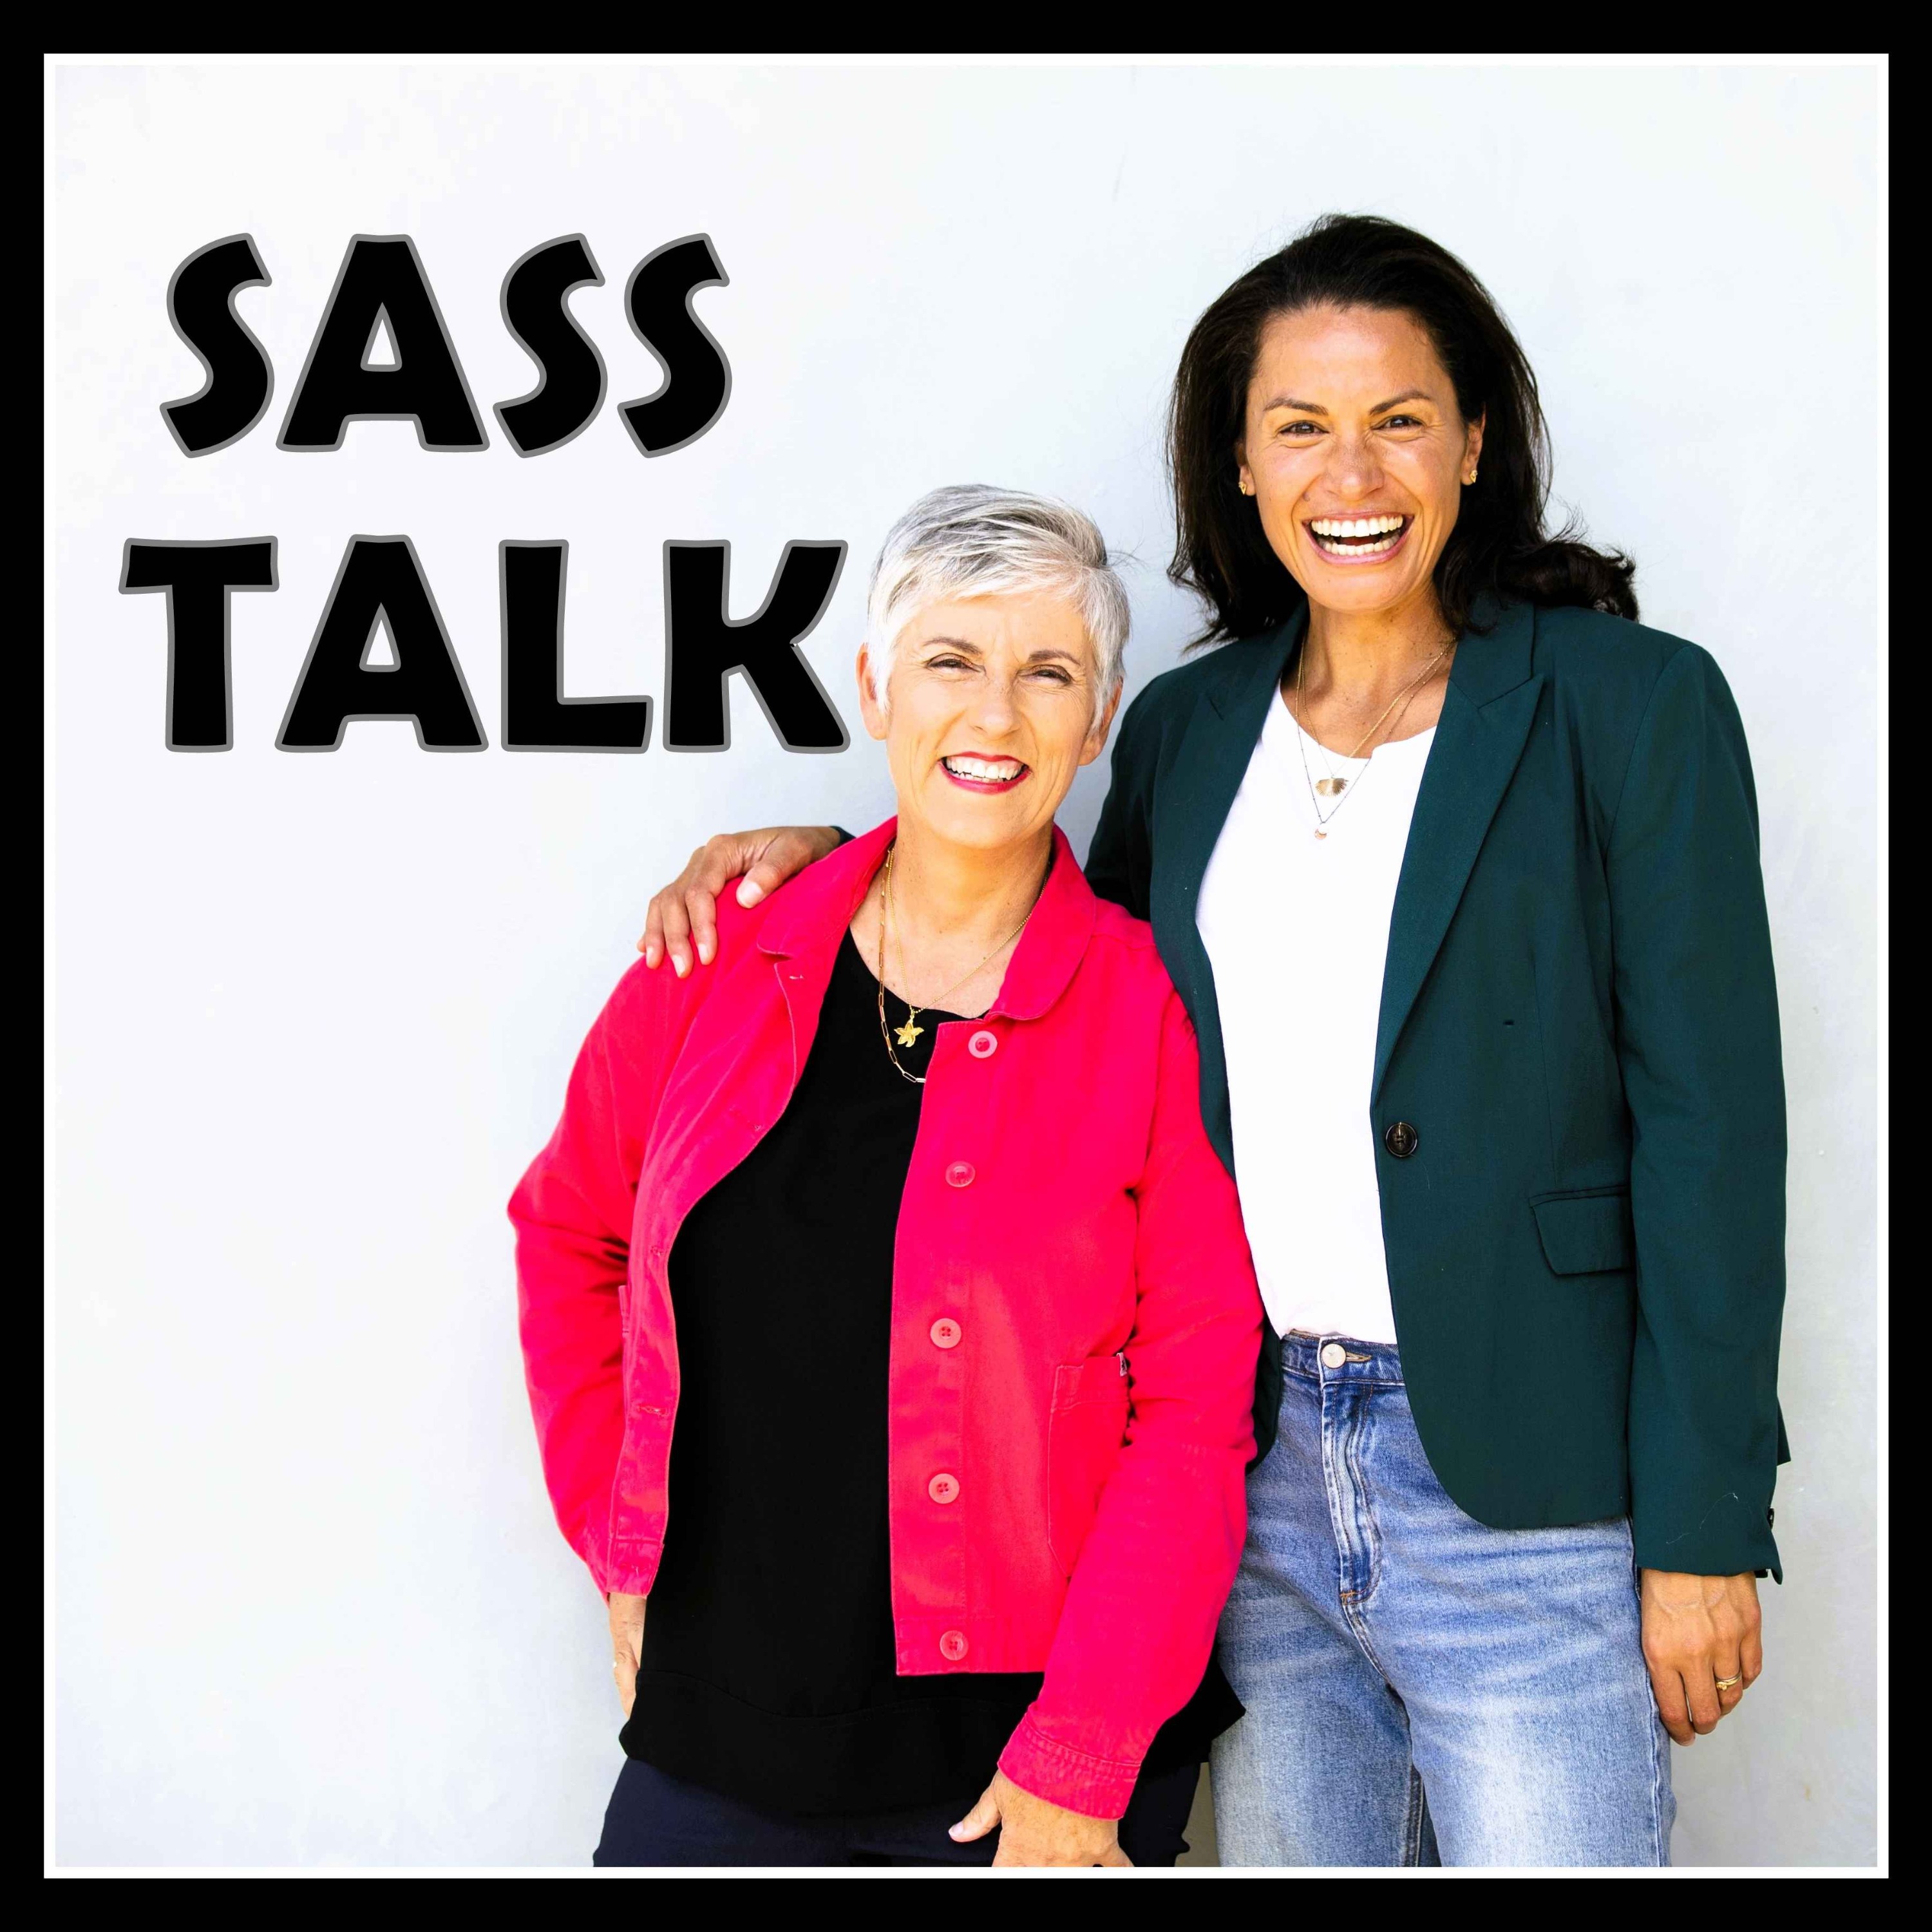 SASS Talk Image